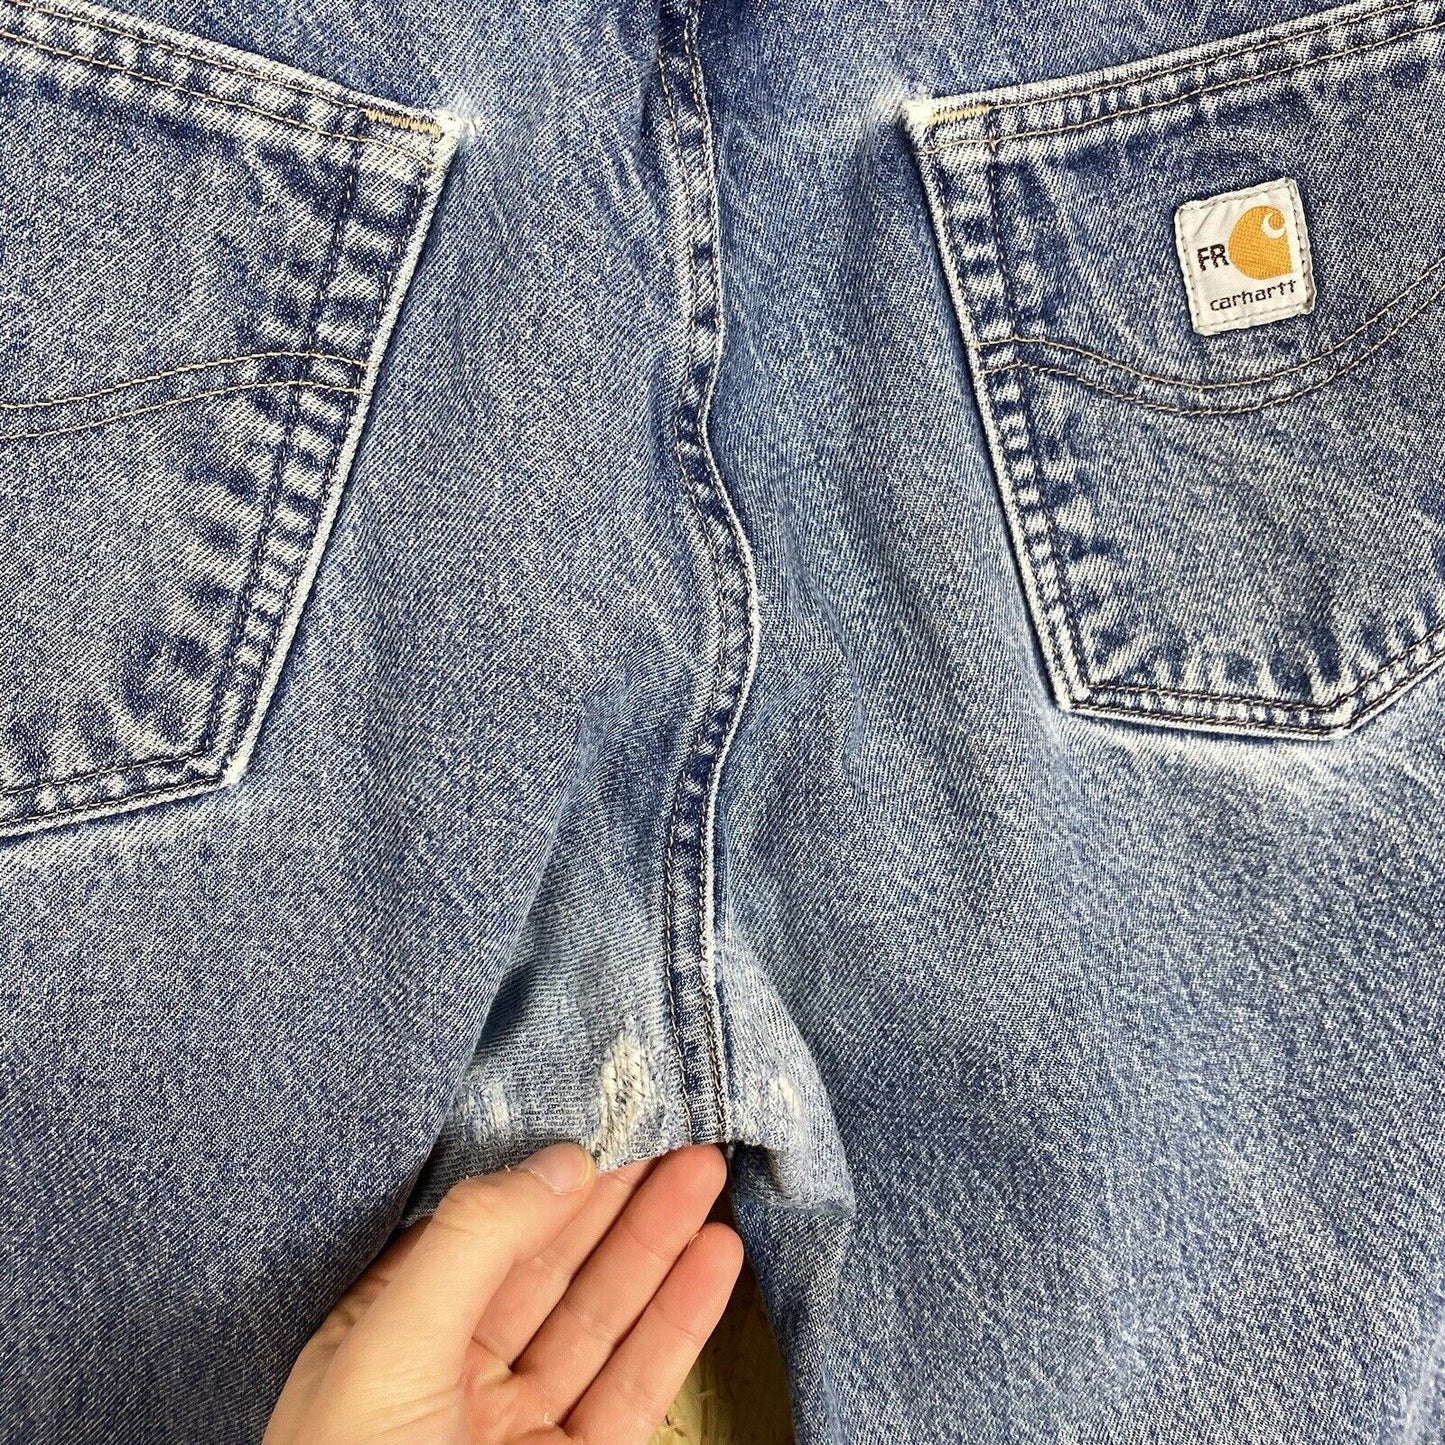 Carhartt Denim Blue Jeans 36x30